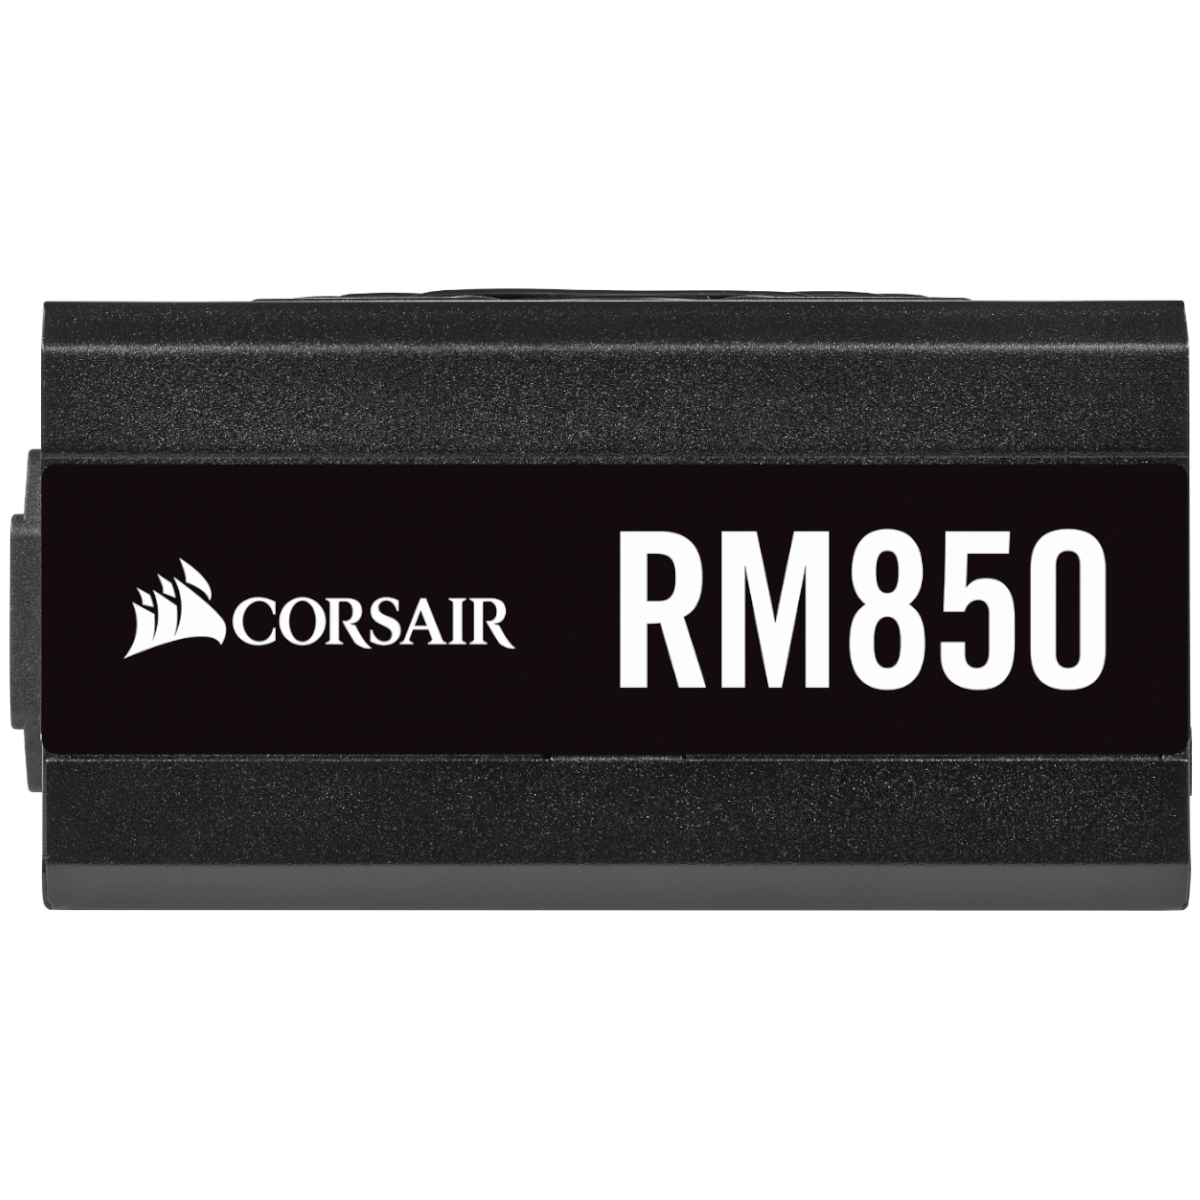 CORSAIR RM850 850W 80+ Gold - Full Modular